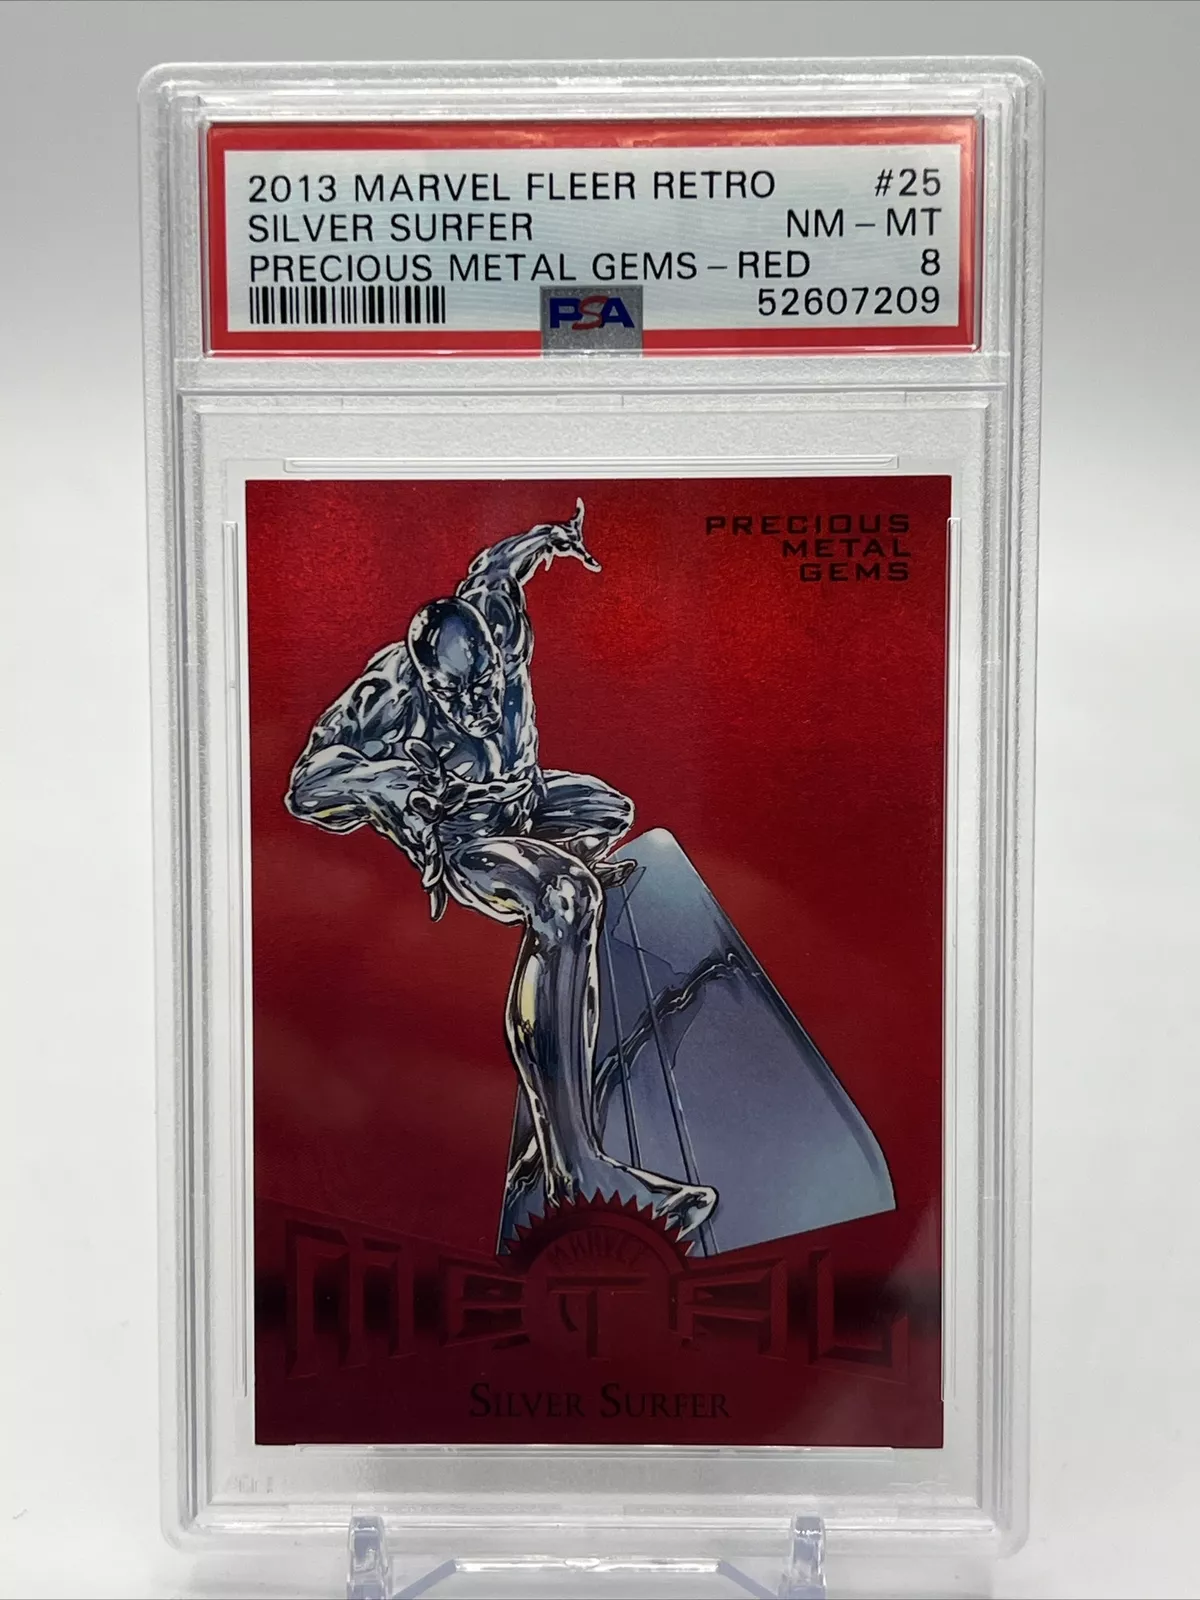 2013 Marvel Fleer Retro RED Precious Metal Gems PMG Silver Surfer /100 #25 PSA 8